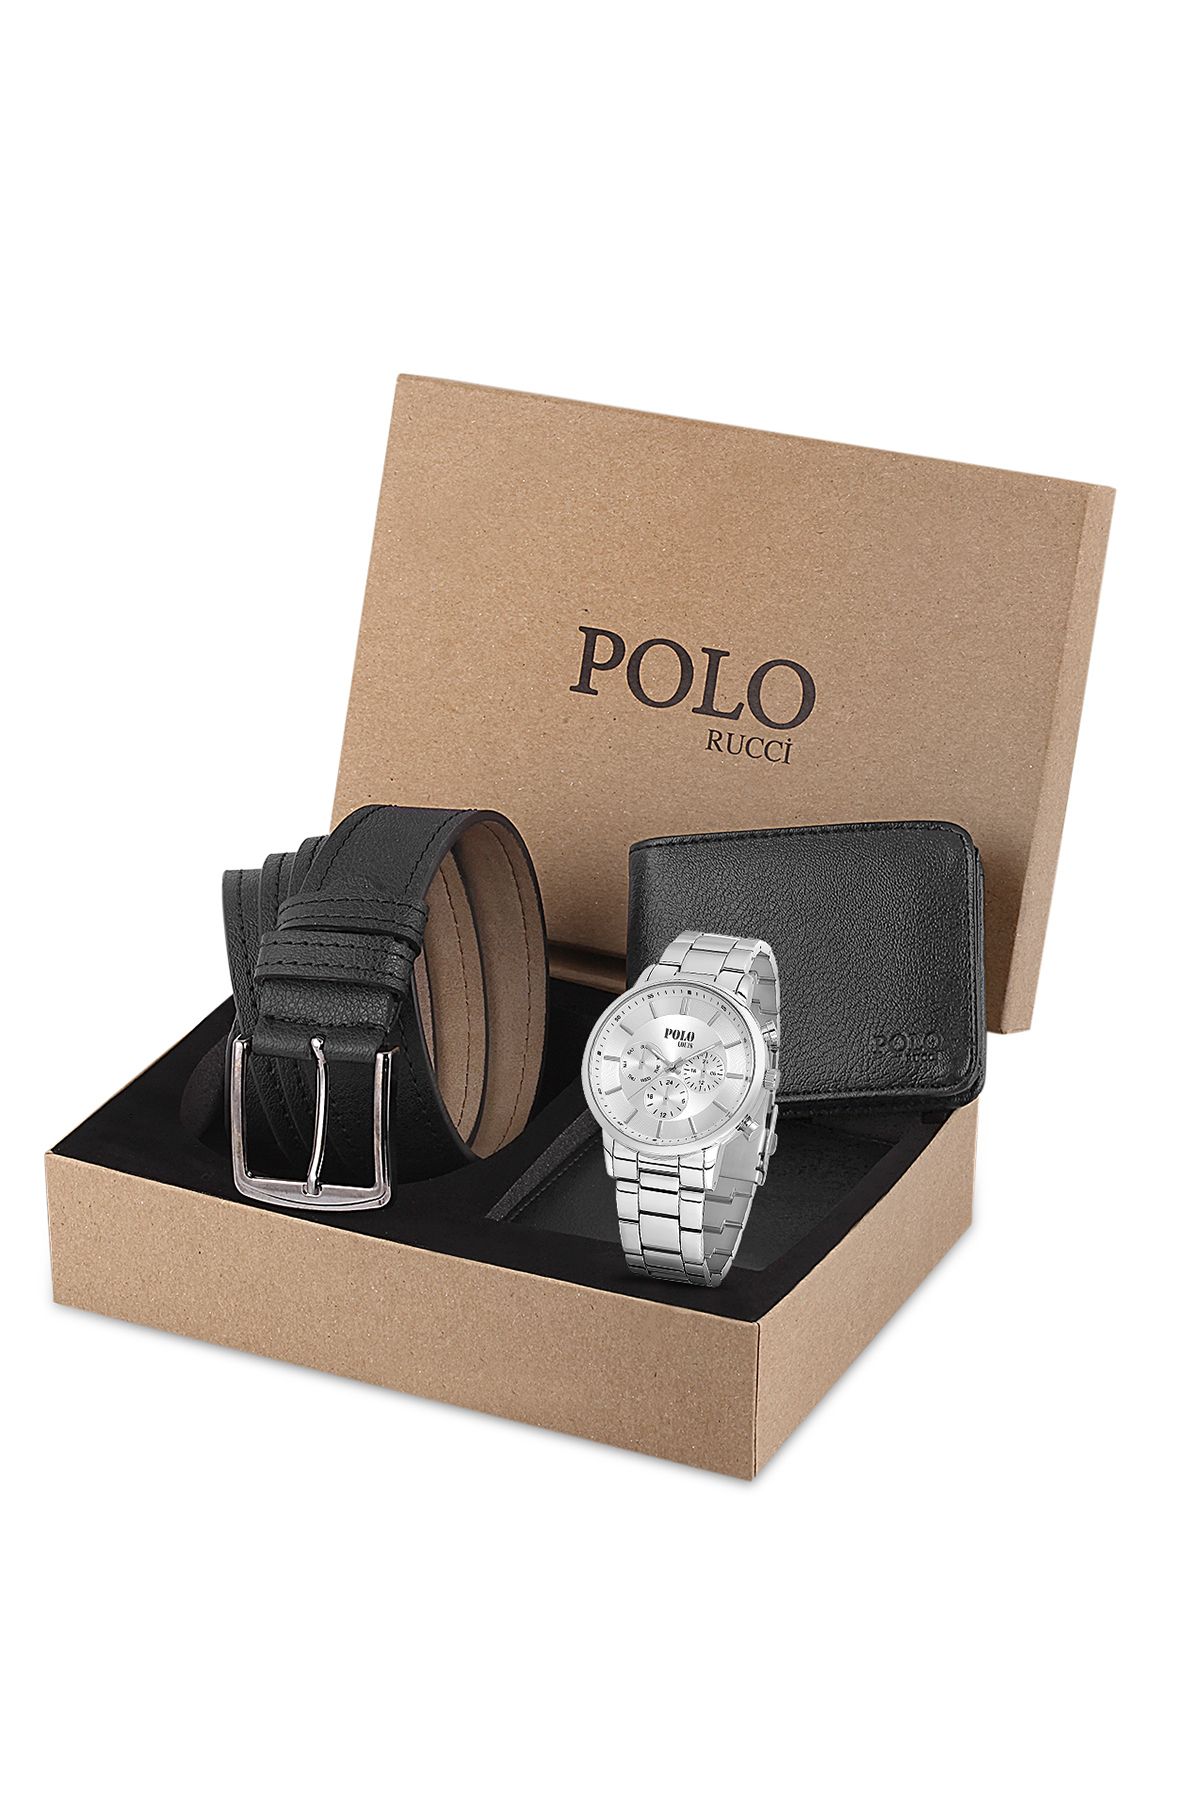 Polo Rucci Erkek Set Kombin Kol Saati Kemer Cüzdan Gümüş Renk PL-0804E4